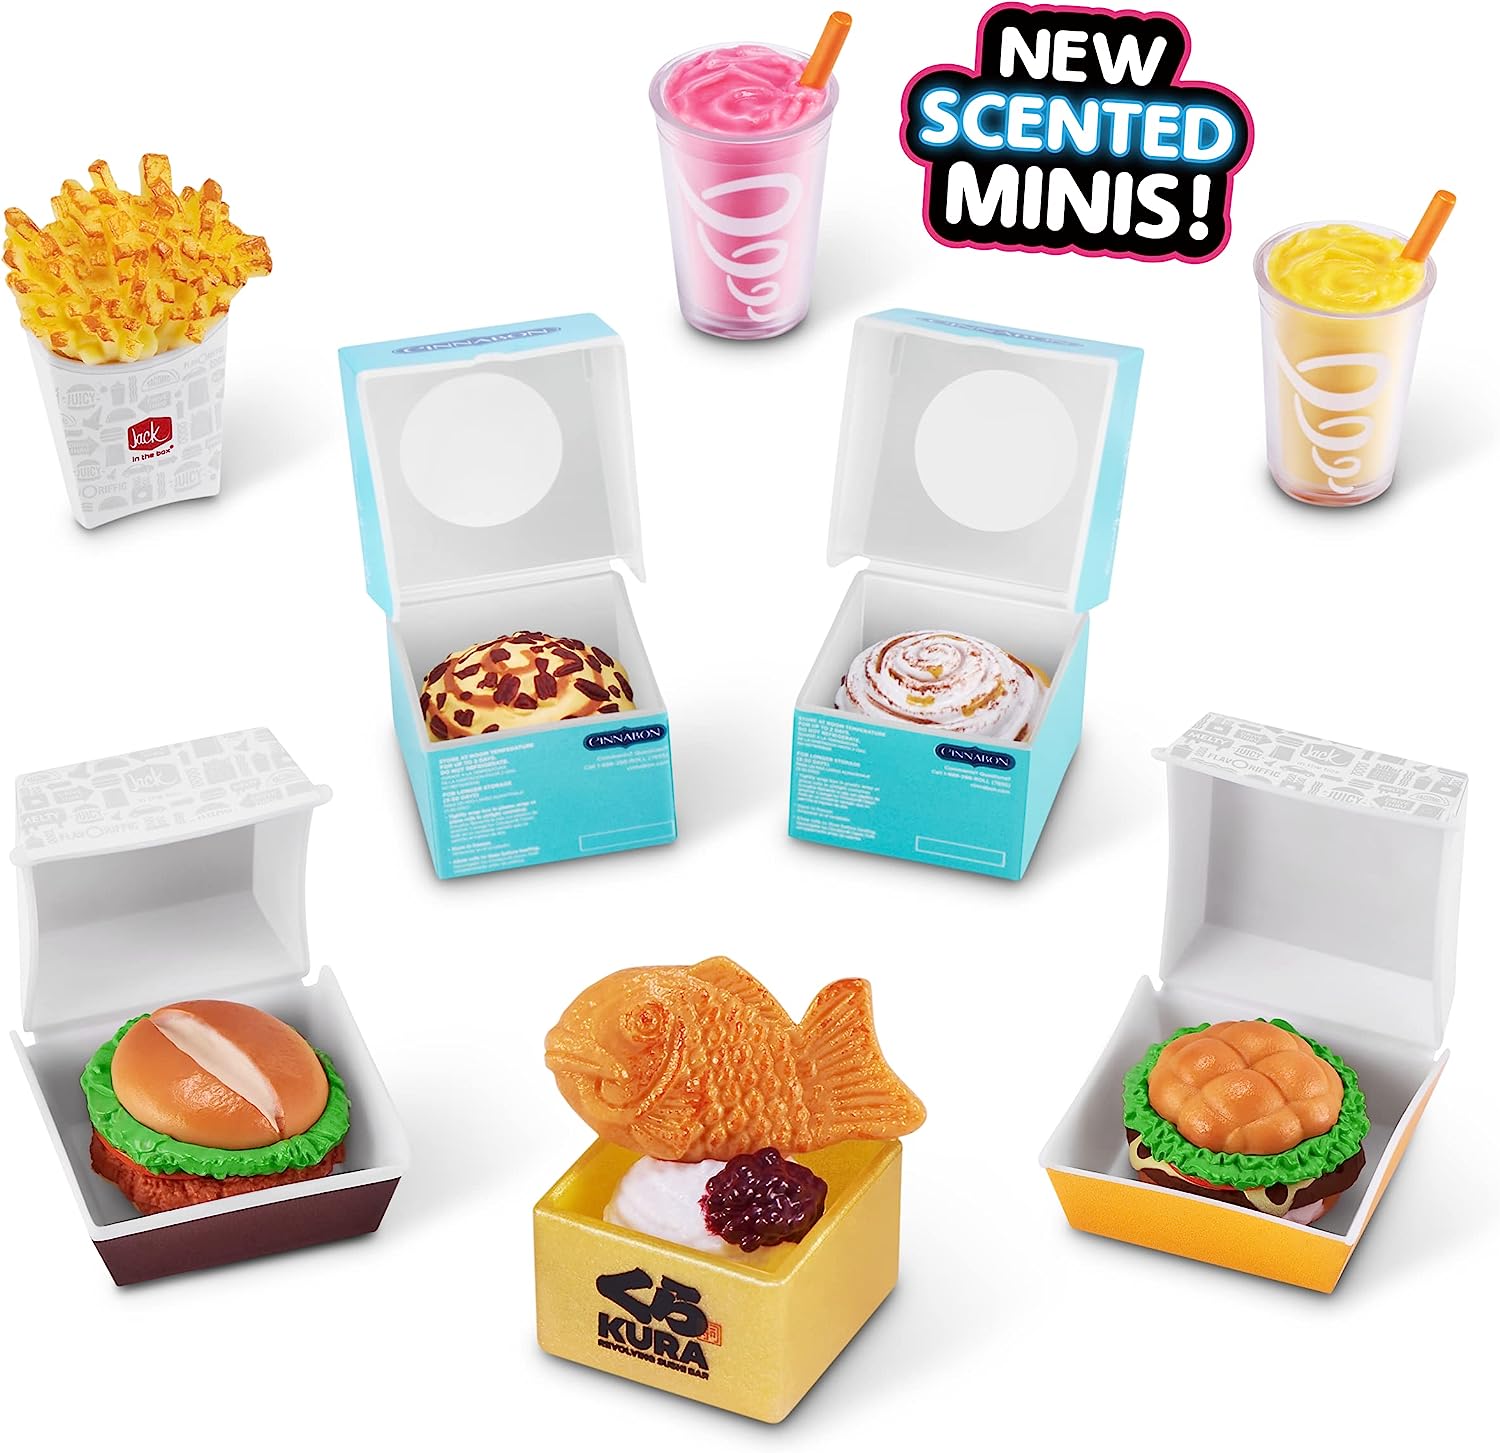 Buy Zuru 5 Surprise Mini Brands Disney Store Series 2 Capsule, Playsets  and figures